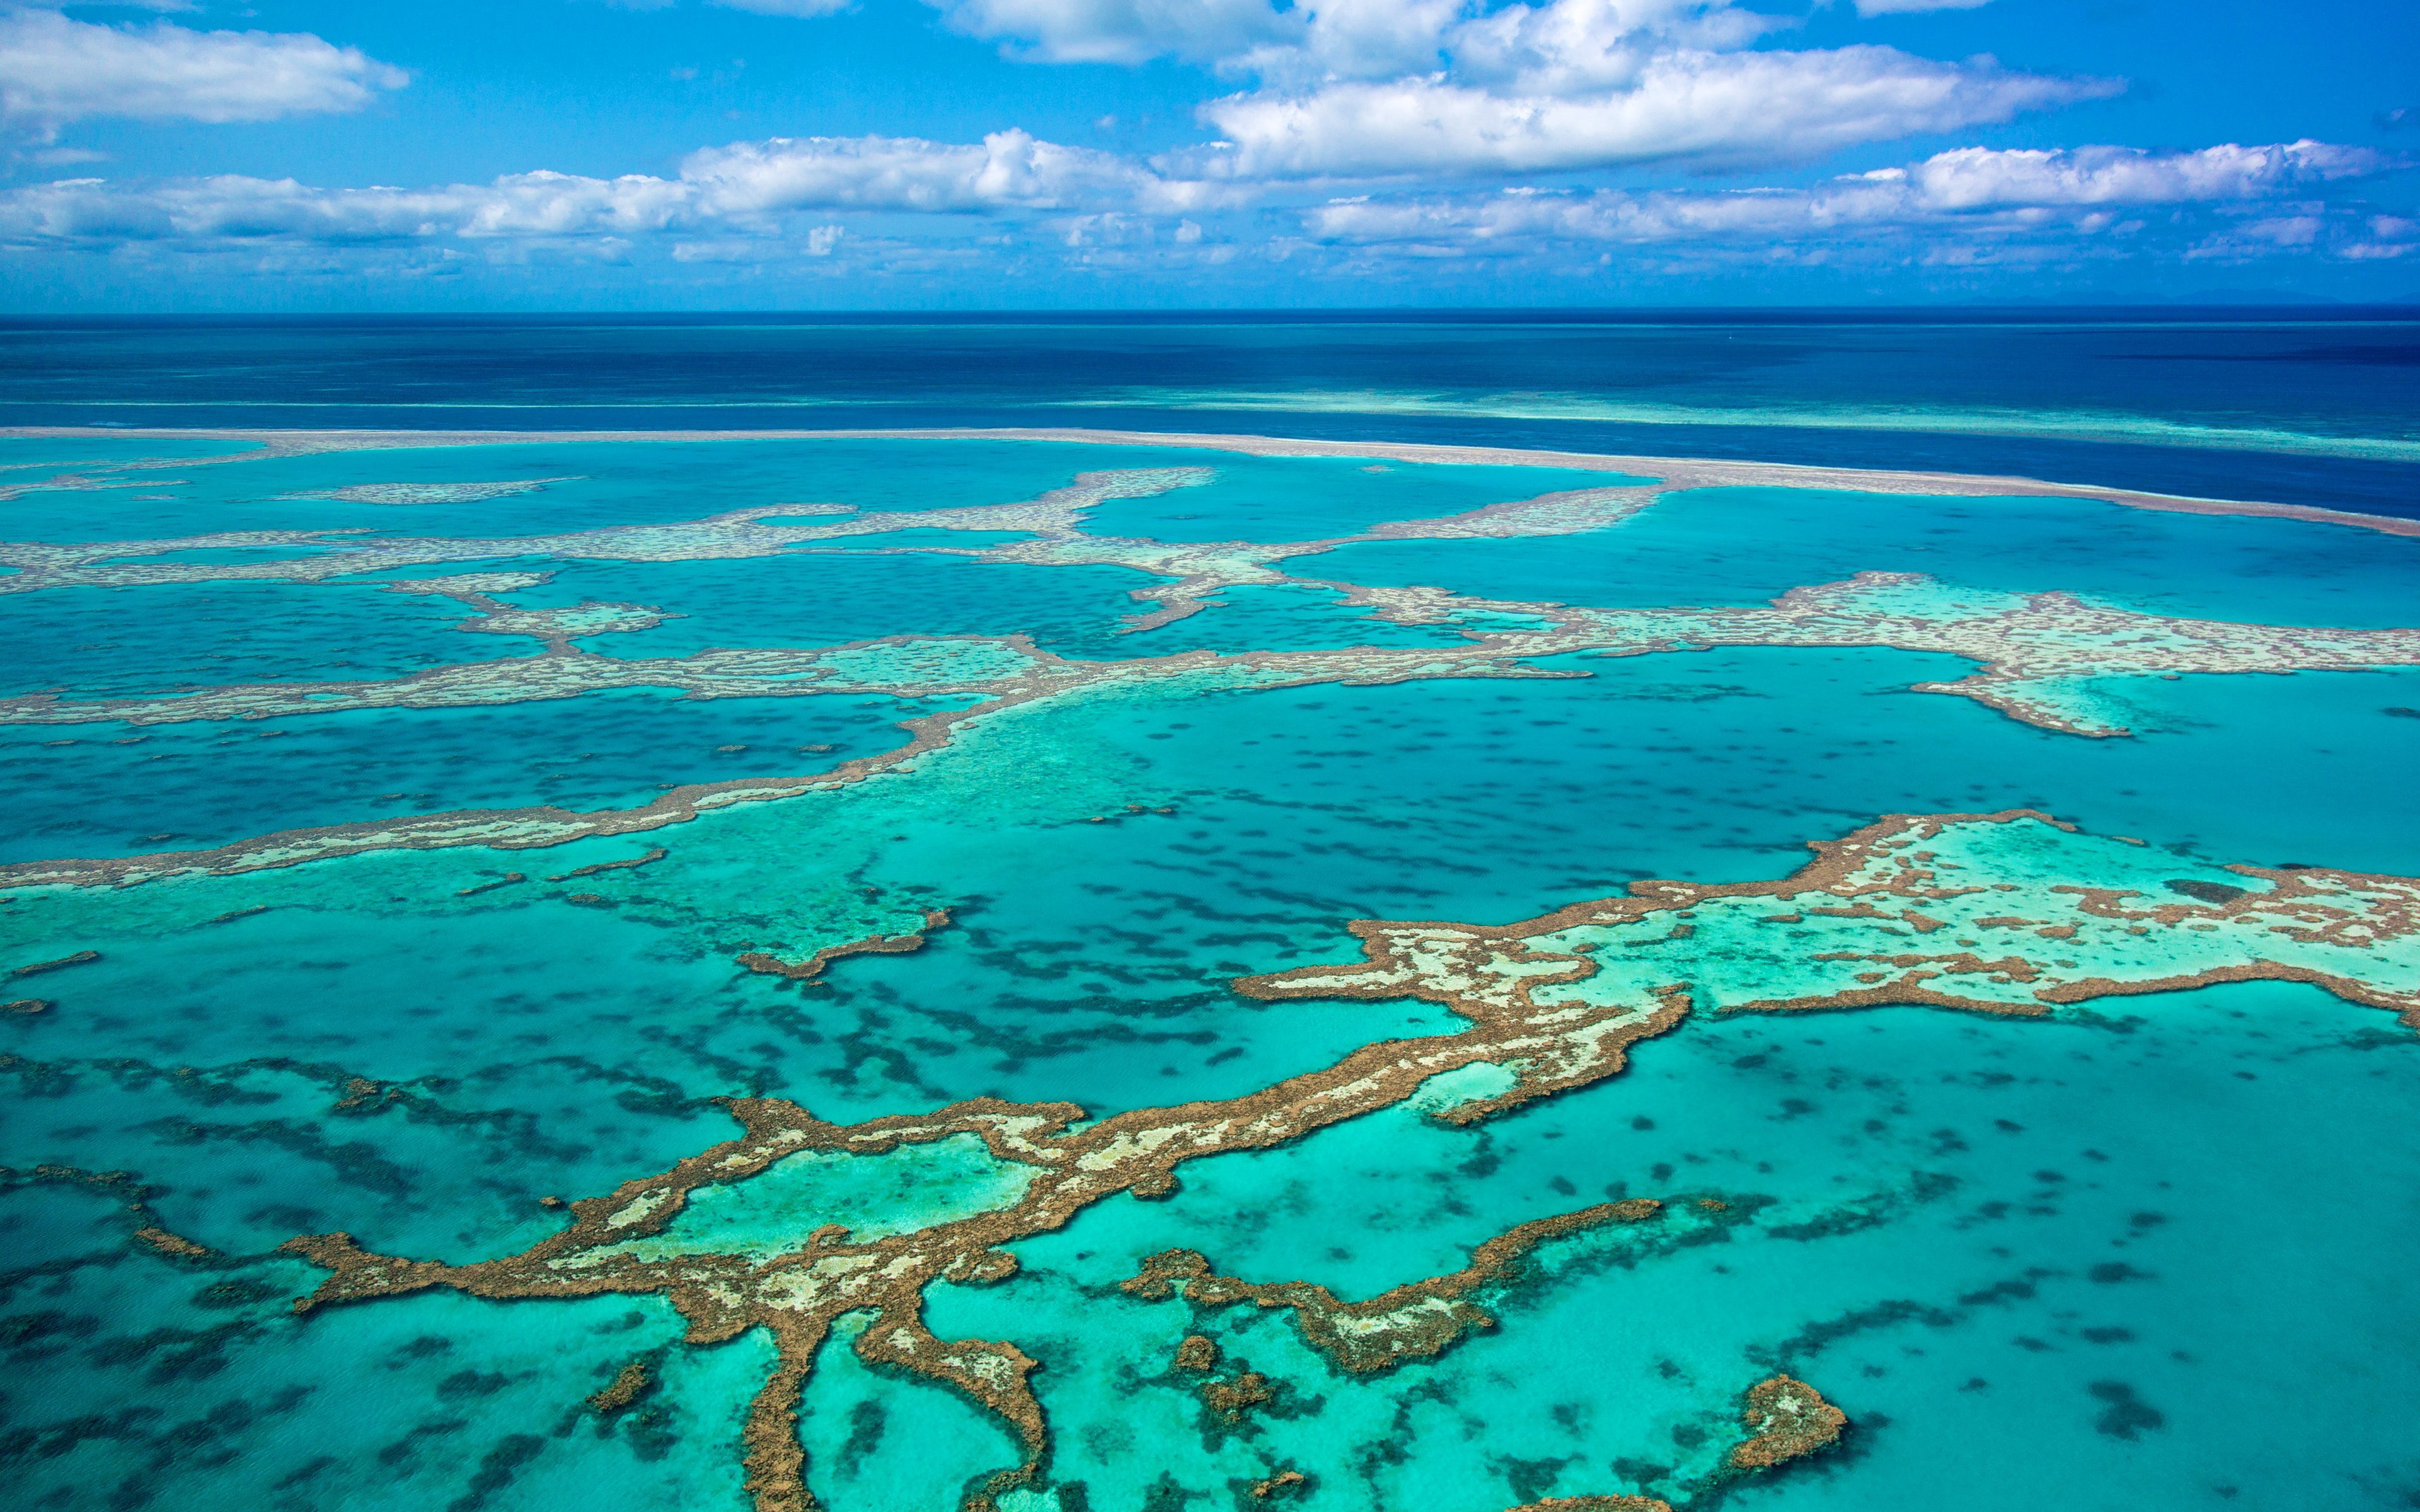 Моря английского океана. Большой Барьерный риф. Барьерный риф в Австралии. Большой Барьерный риф в коралловом море. Большой коралловый риф в Австралии.